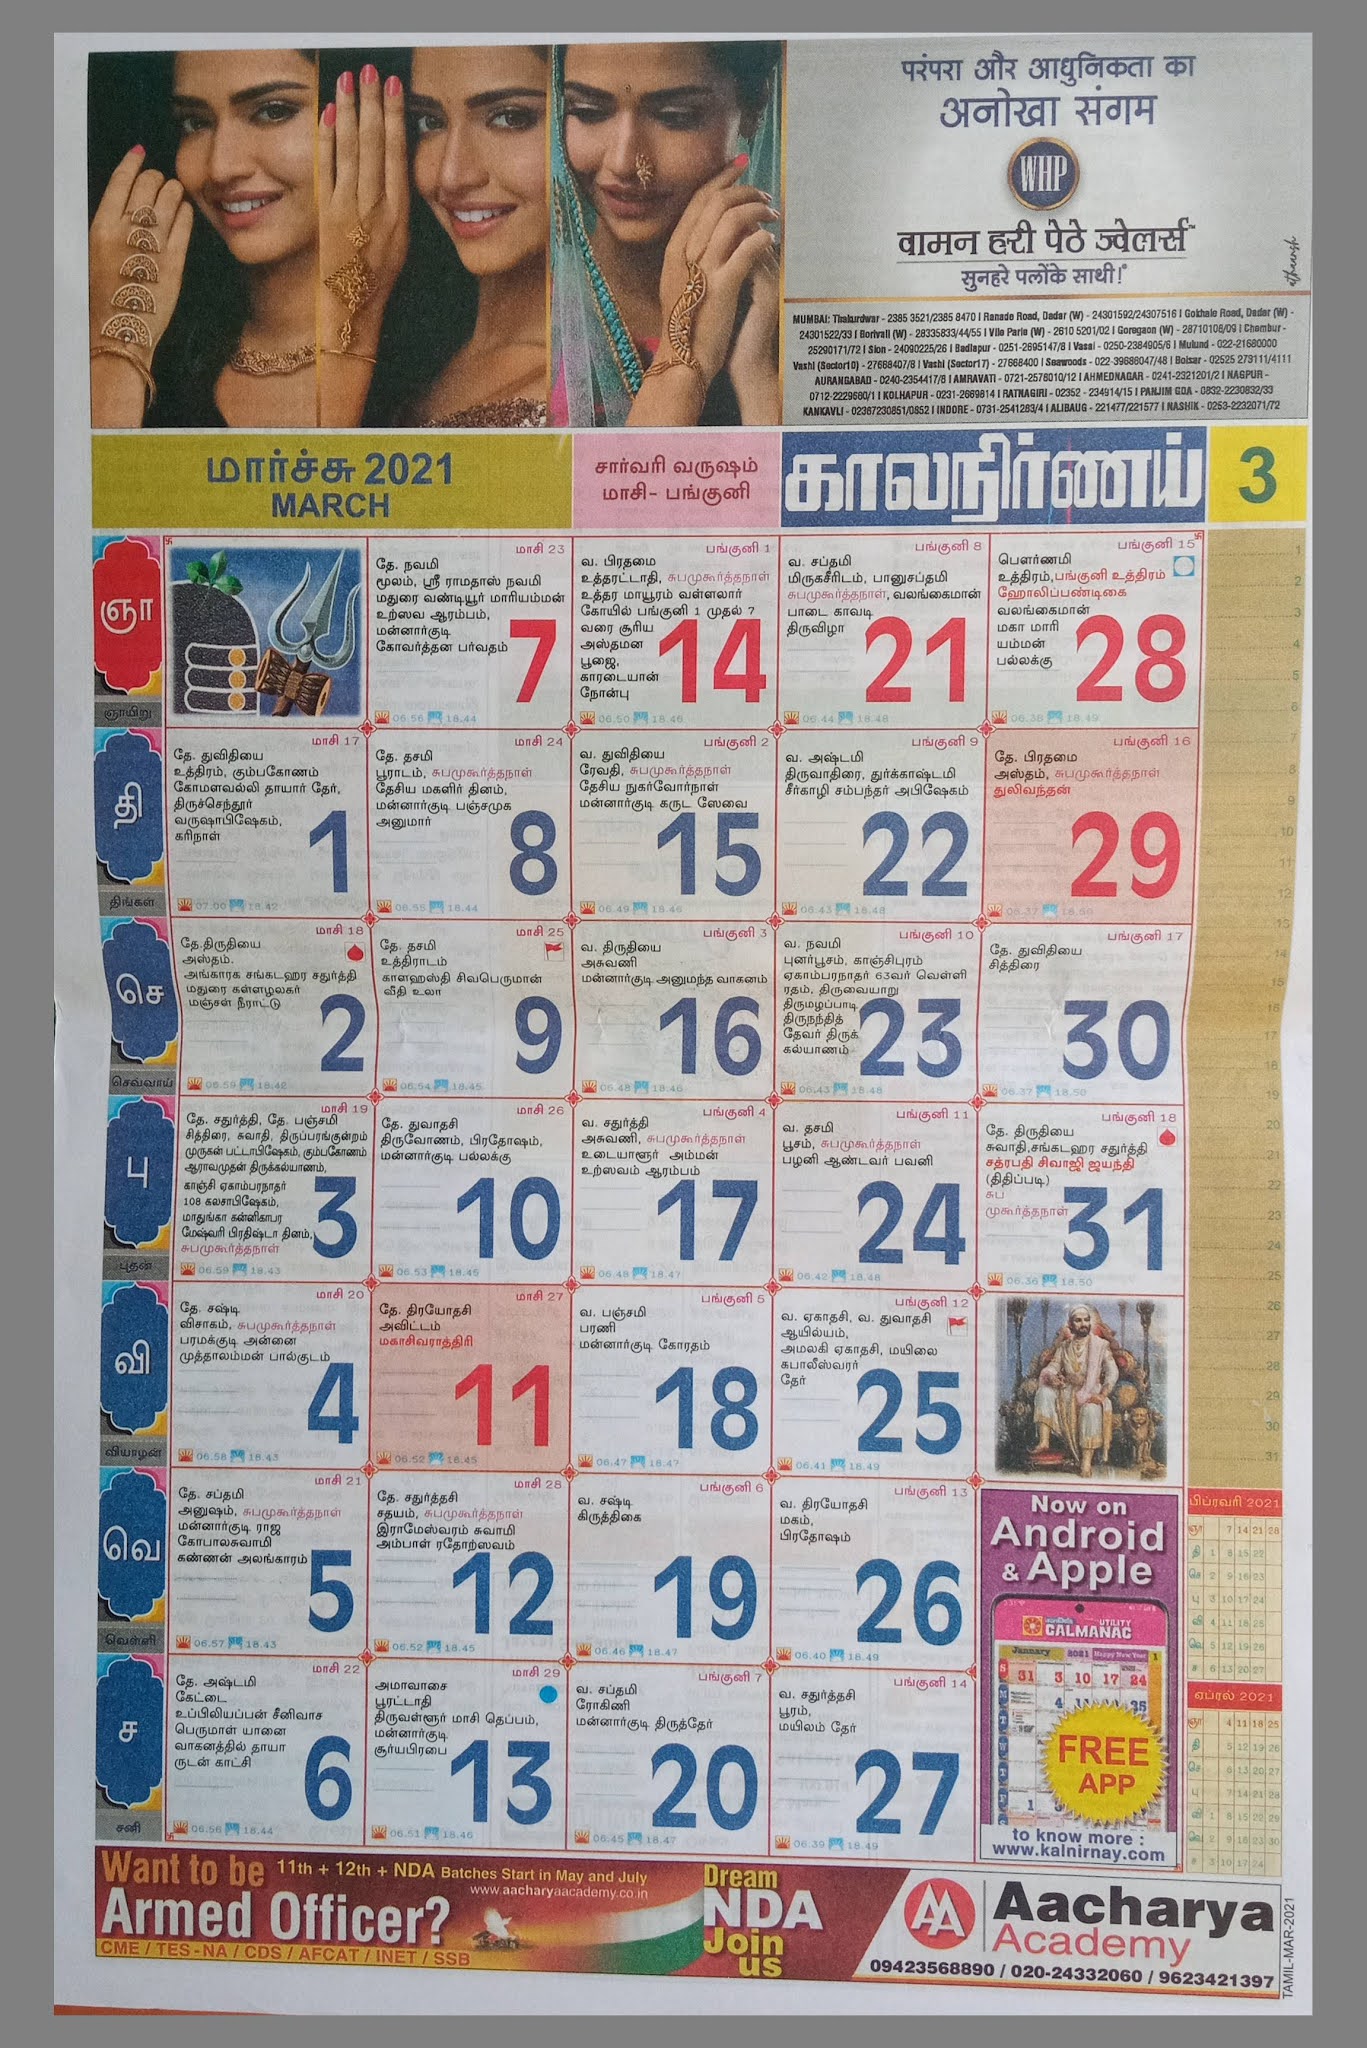 Tamil calendar july 2021